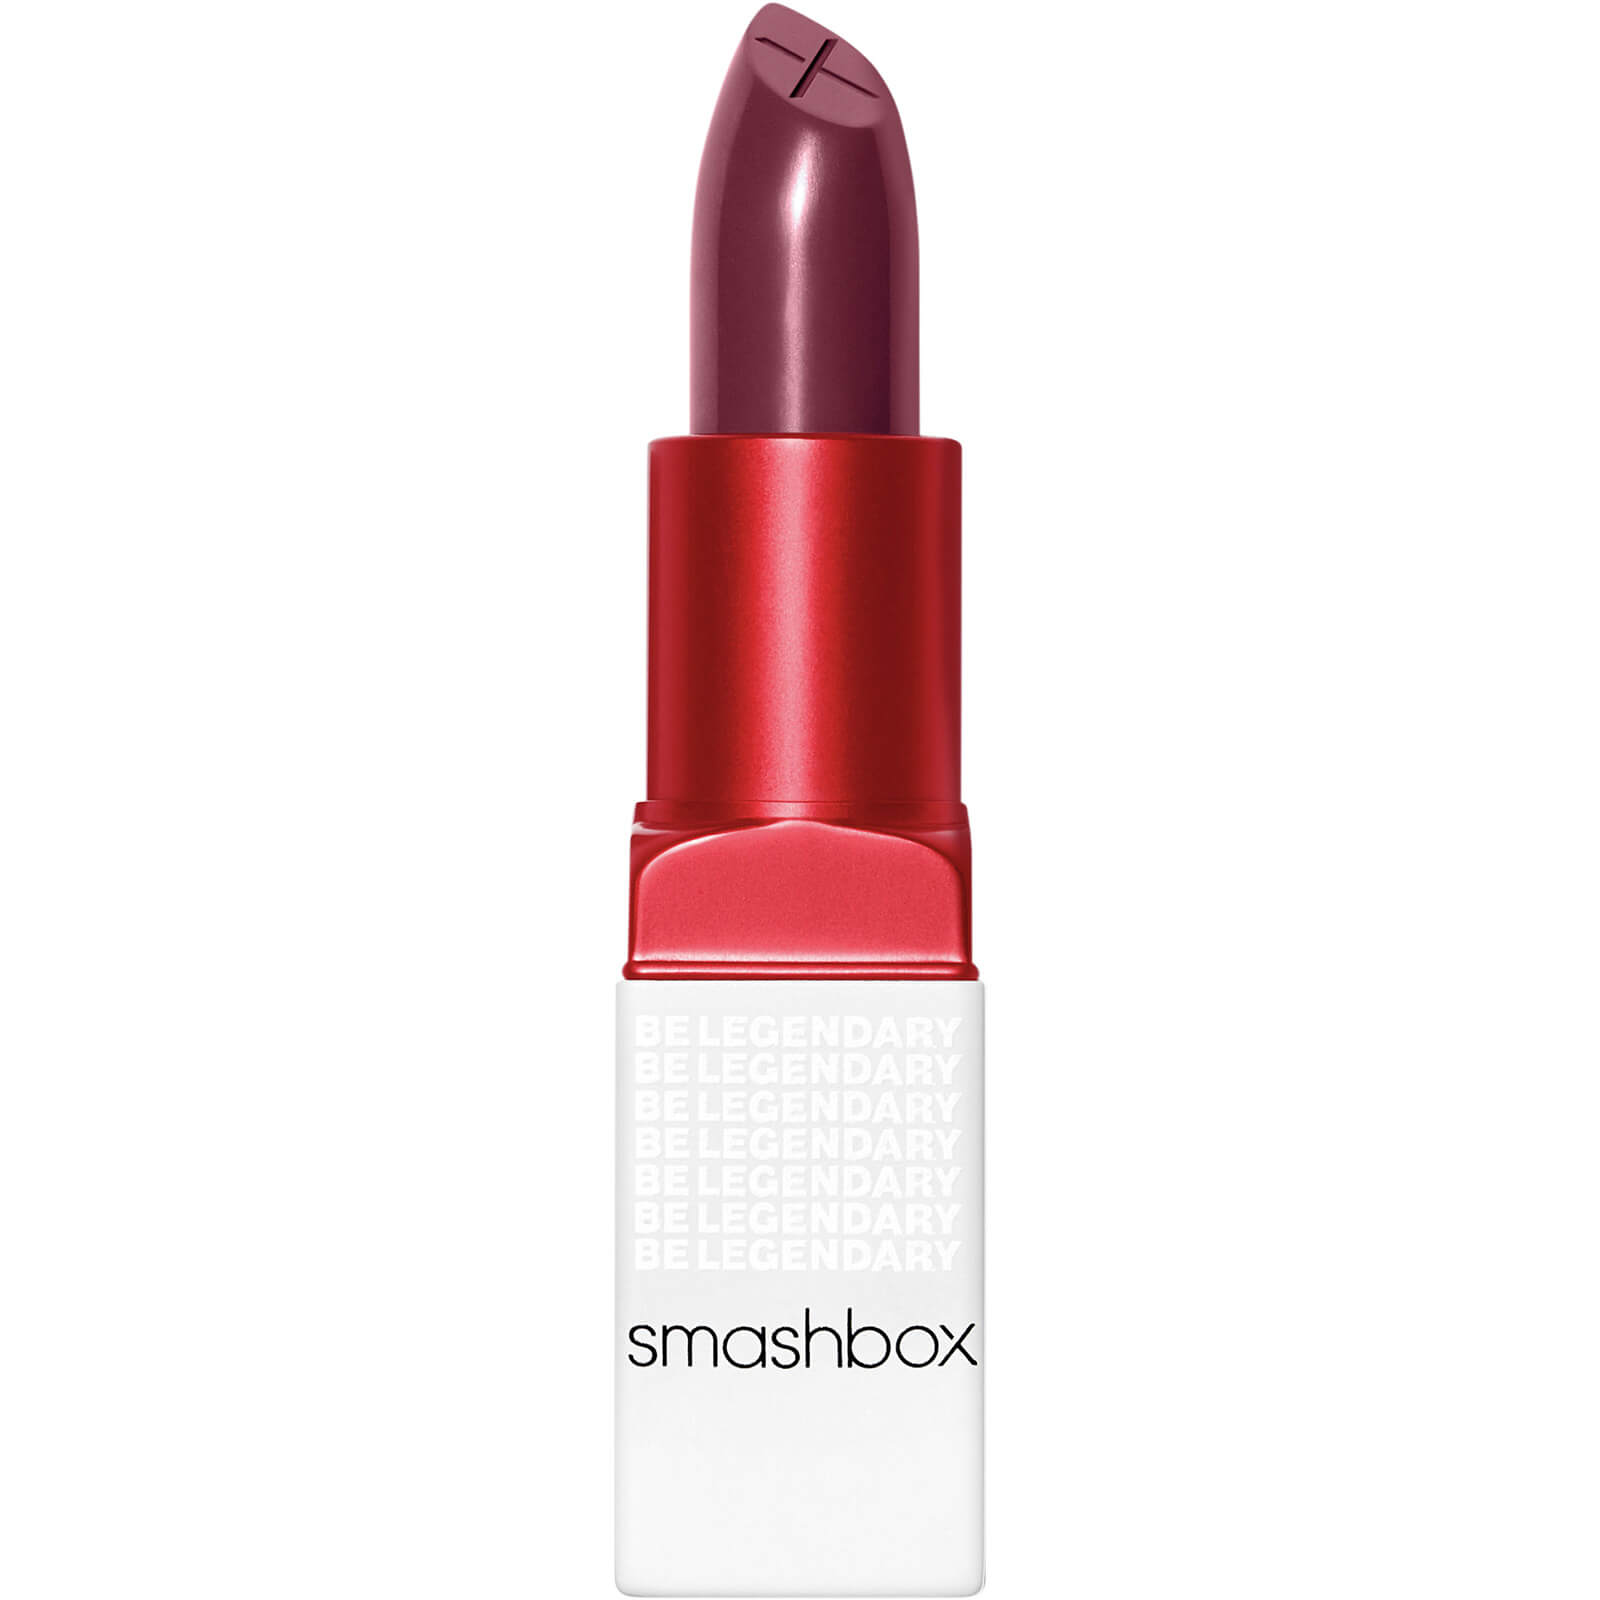 Smashbox Be Legendary Prime and Plush Lipstick 3.4g (Various Shades) - Cranberry